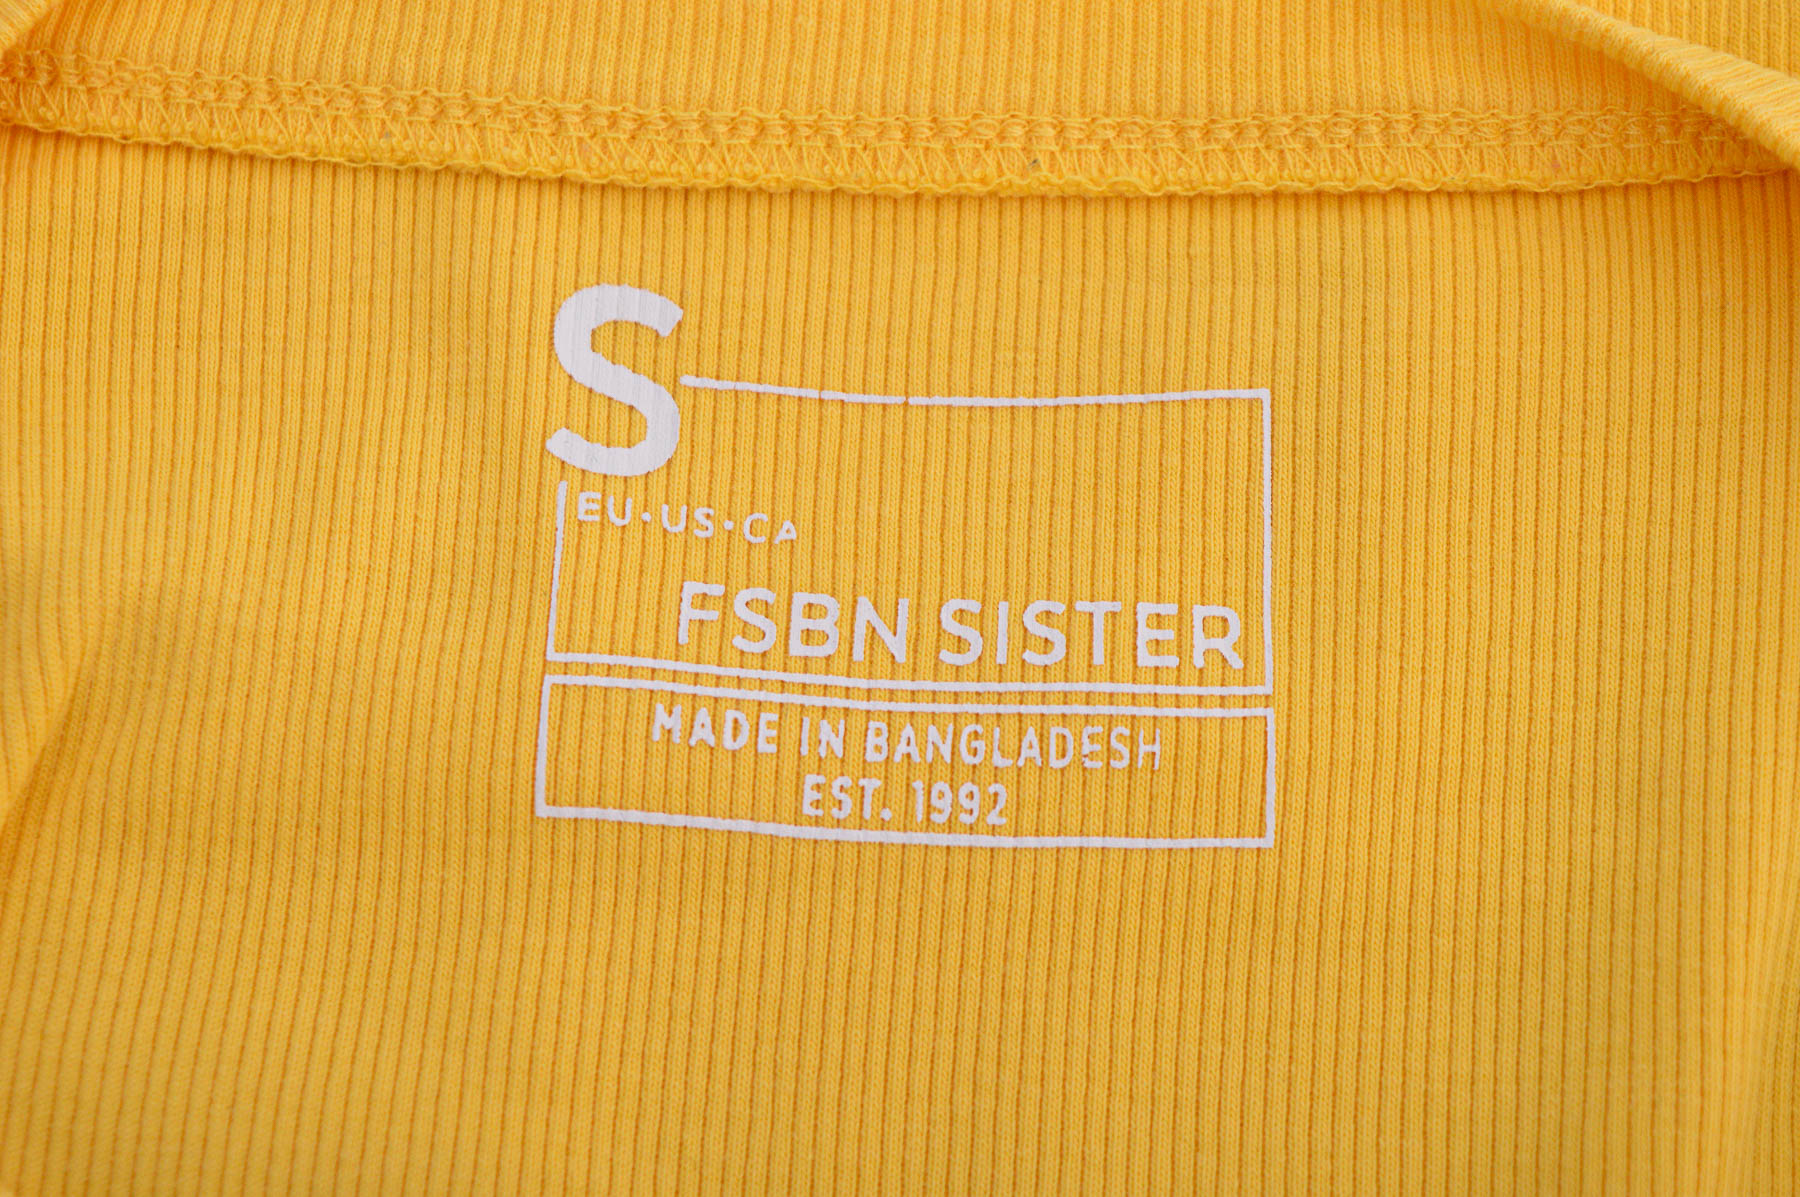 Tricou de damă - FSBN SISTER - 2